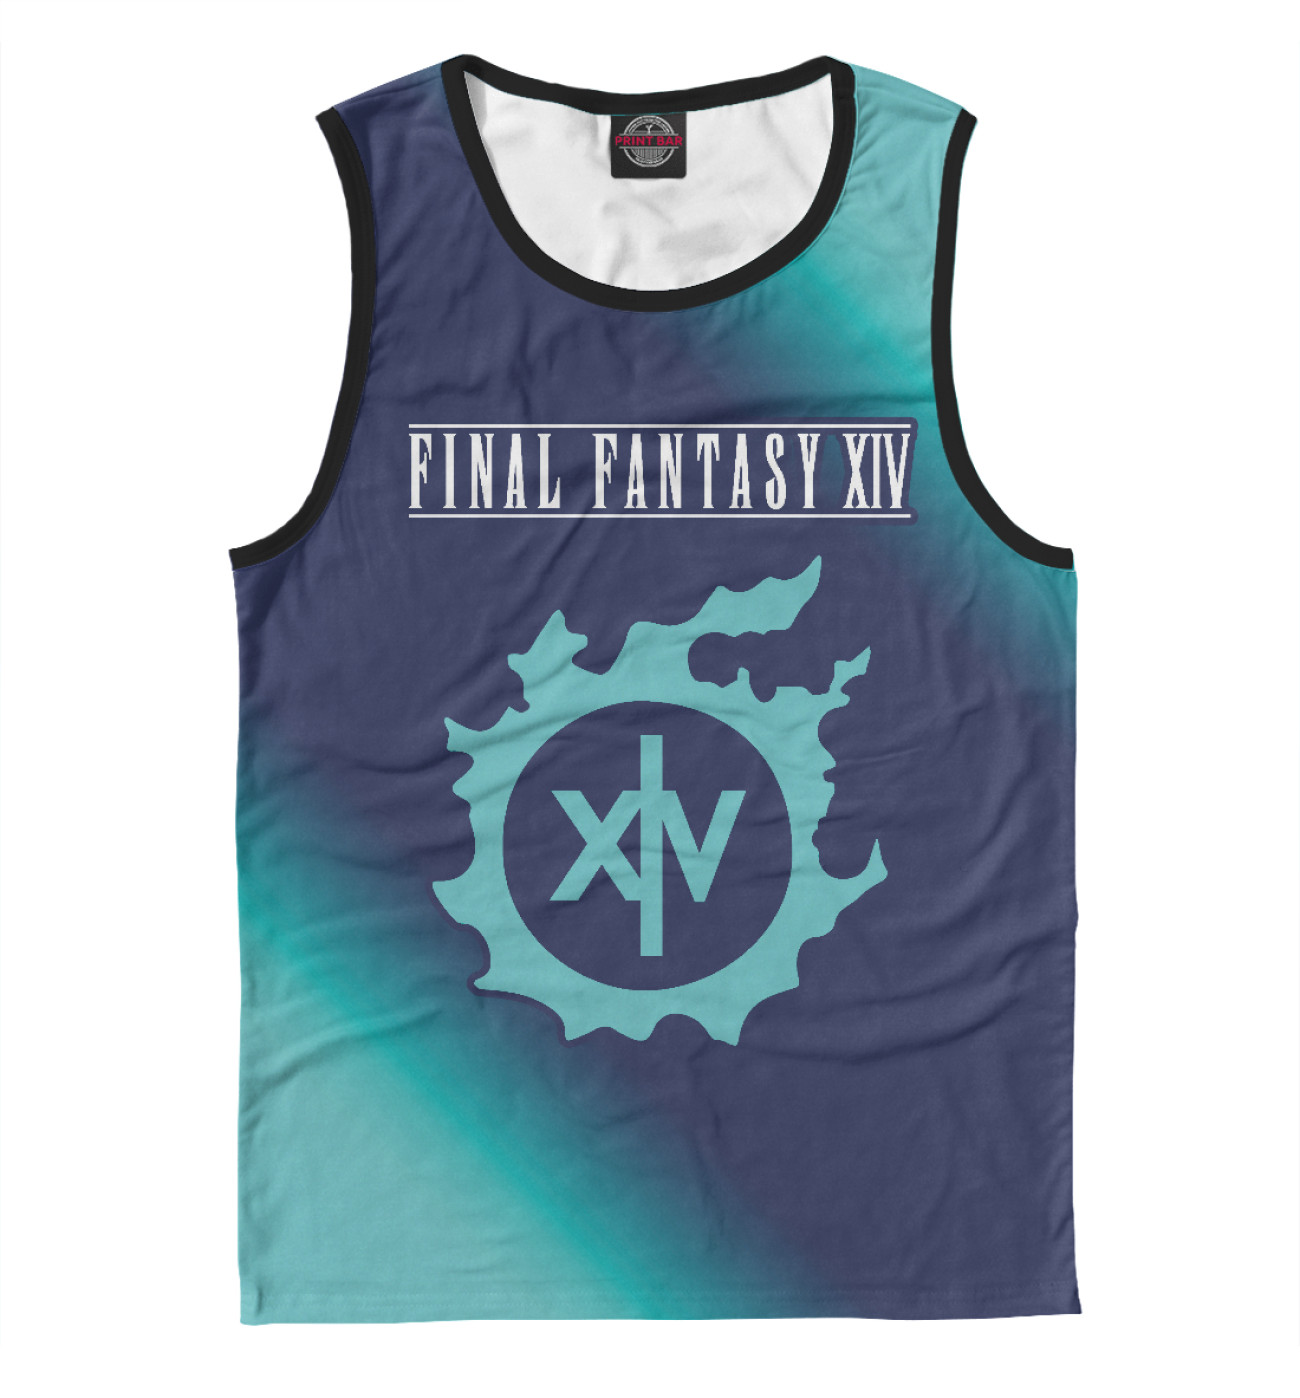 Мужская Майка Final Fantasy XIV - Метеор, артикул: FLF-895010-may-2